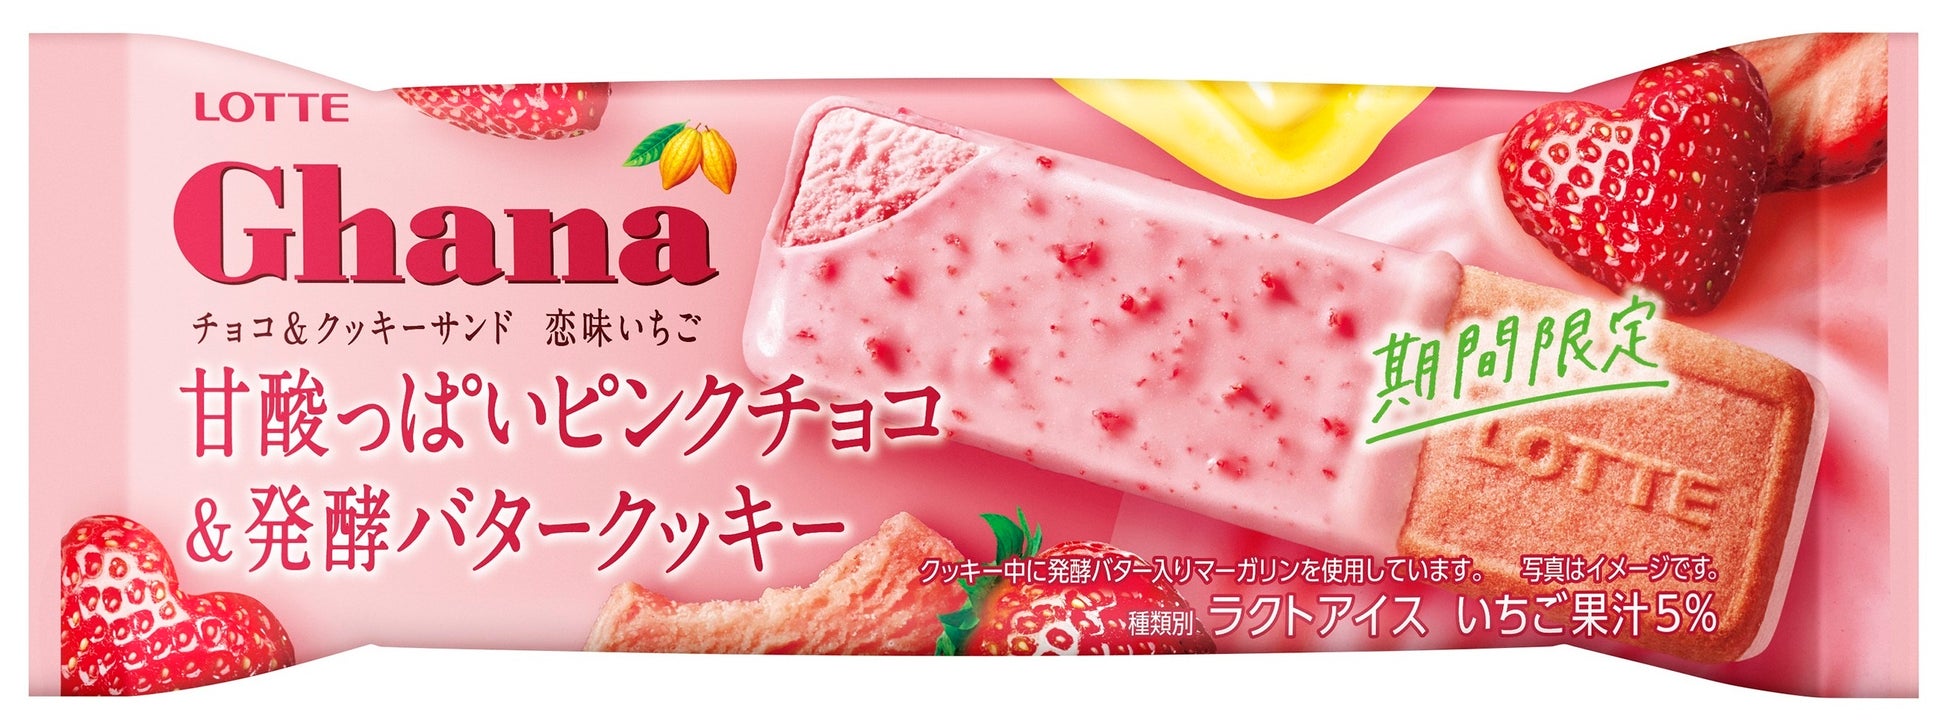 KEITA MARUYAMA（ケイタマルヤマ）よりデザイナー念願のバレンタイン向けチョコレート缶発売！